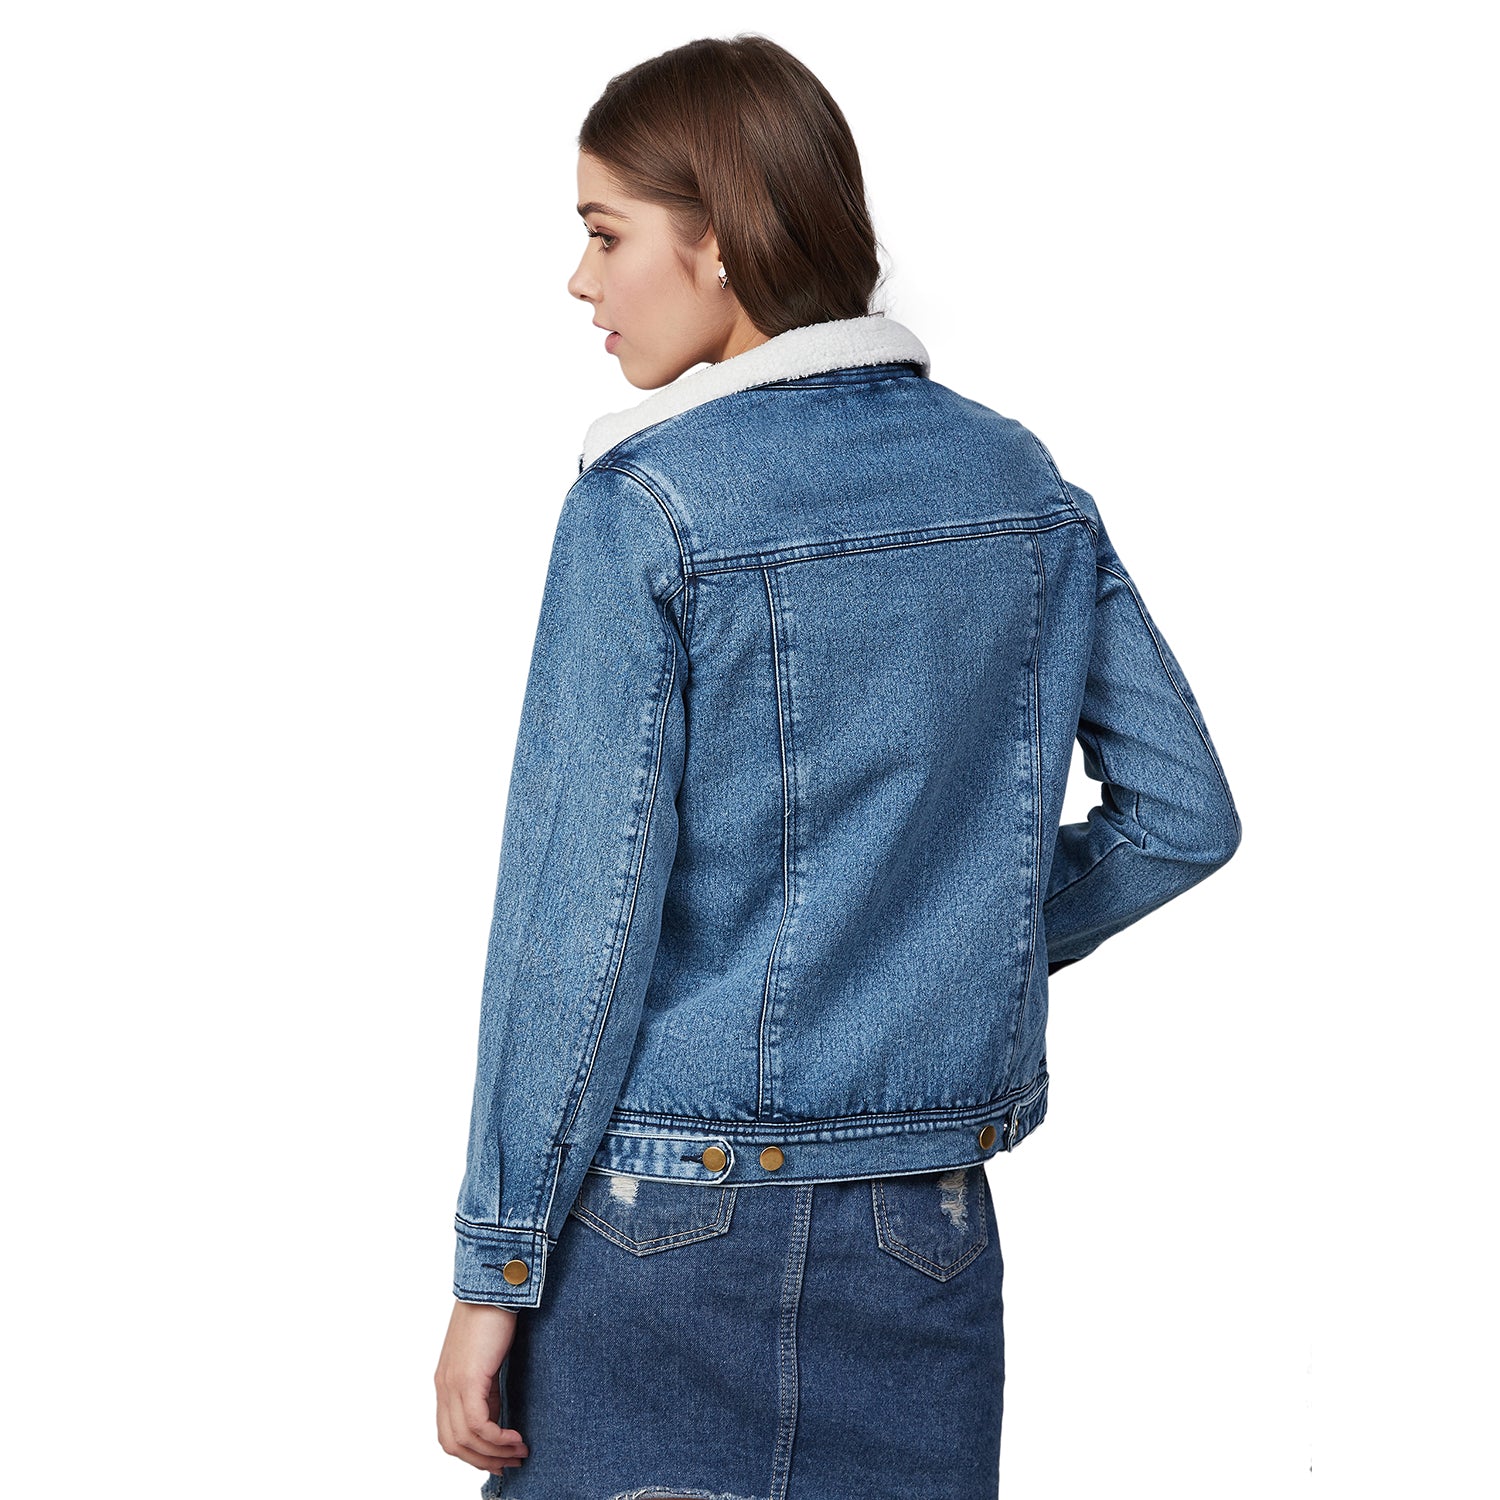 Women's Denim Jacket with Soft Warm Faux Fur Lining inside -Blue - StyleStone